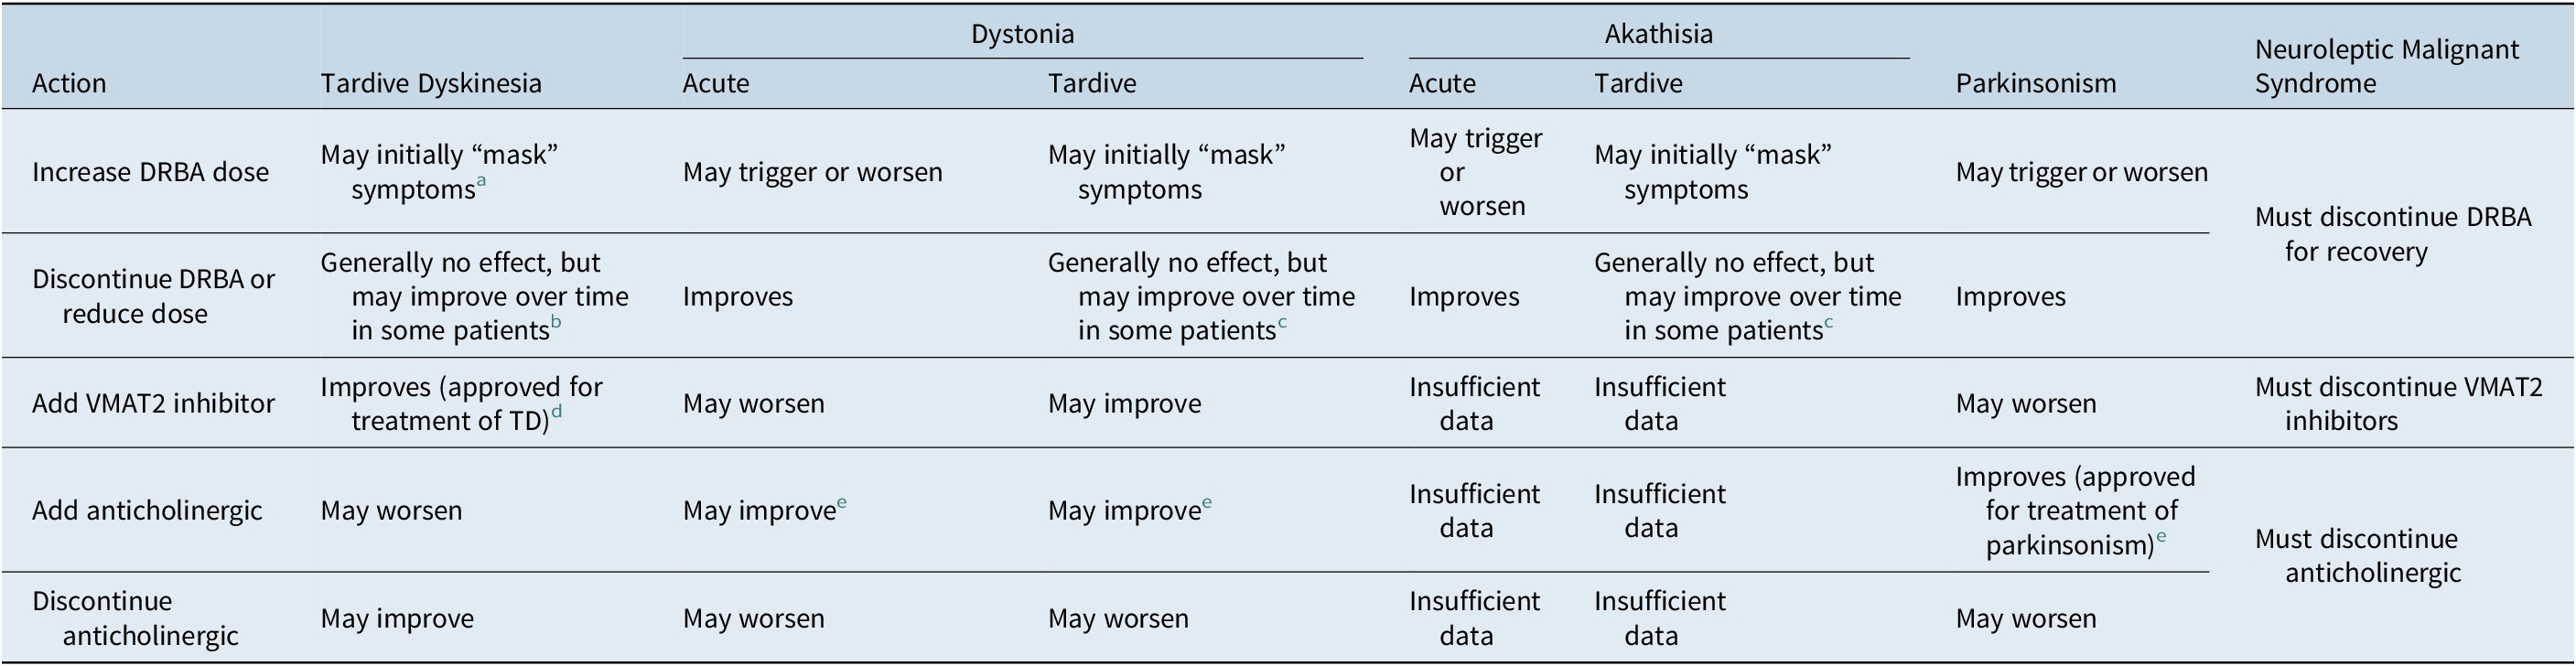 acute dystonia